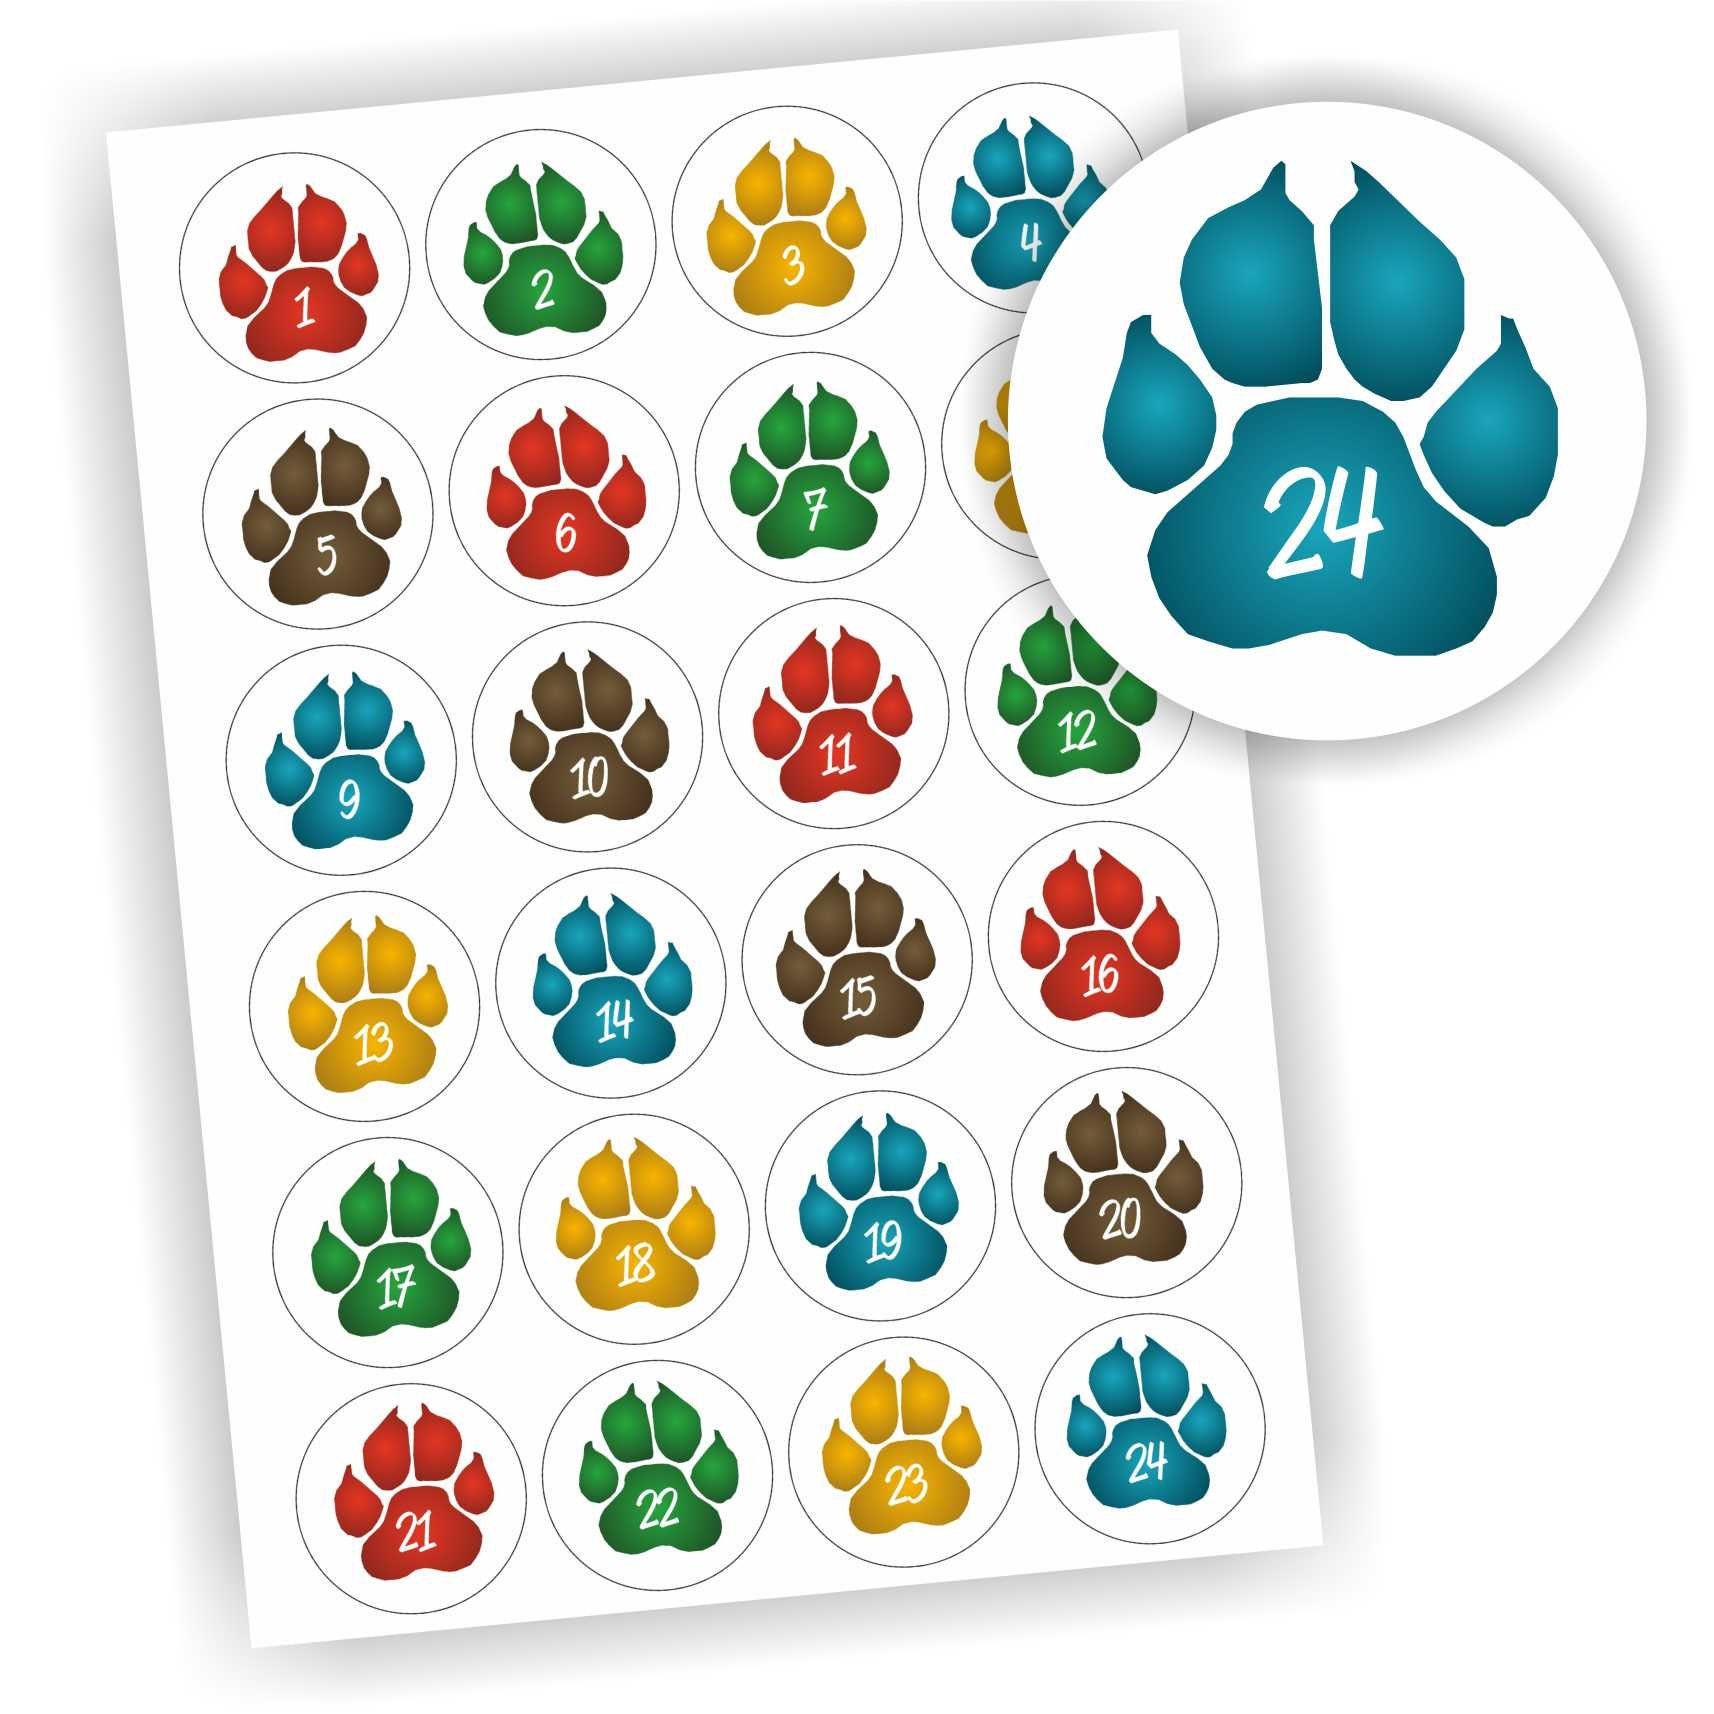 4x Aufkleber Auto Hunde Katzen Pfoten Tatzen 3D Sticker Emblem